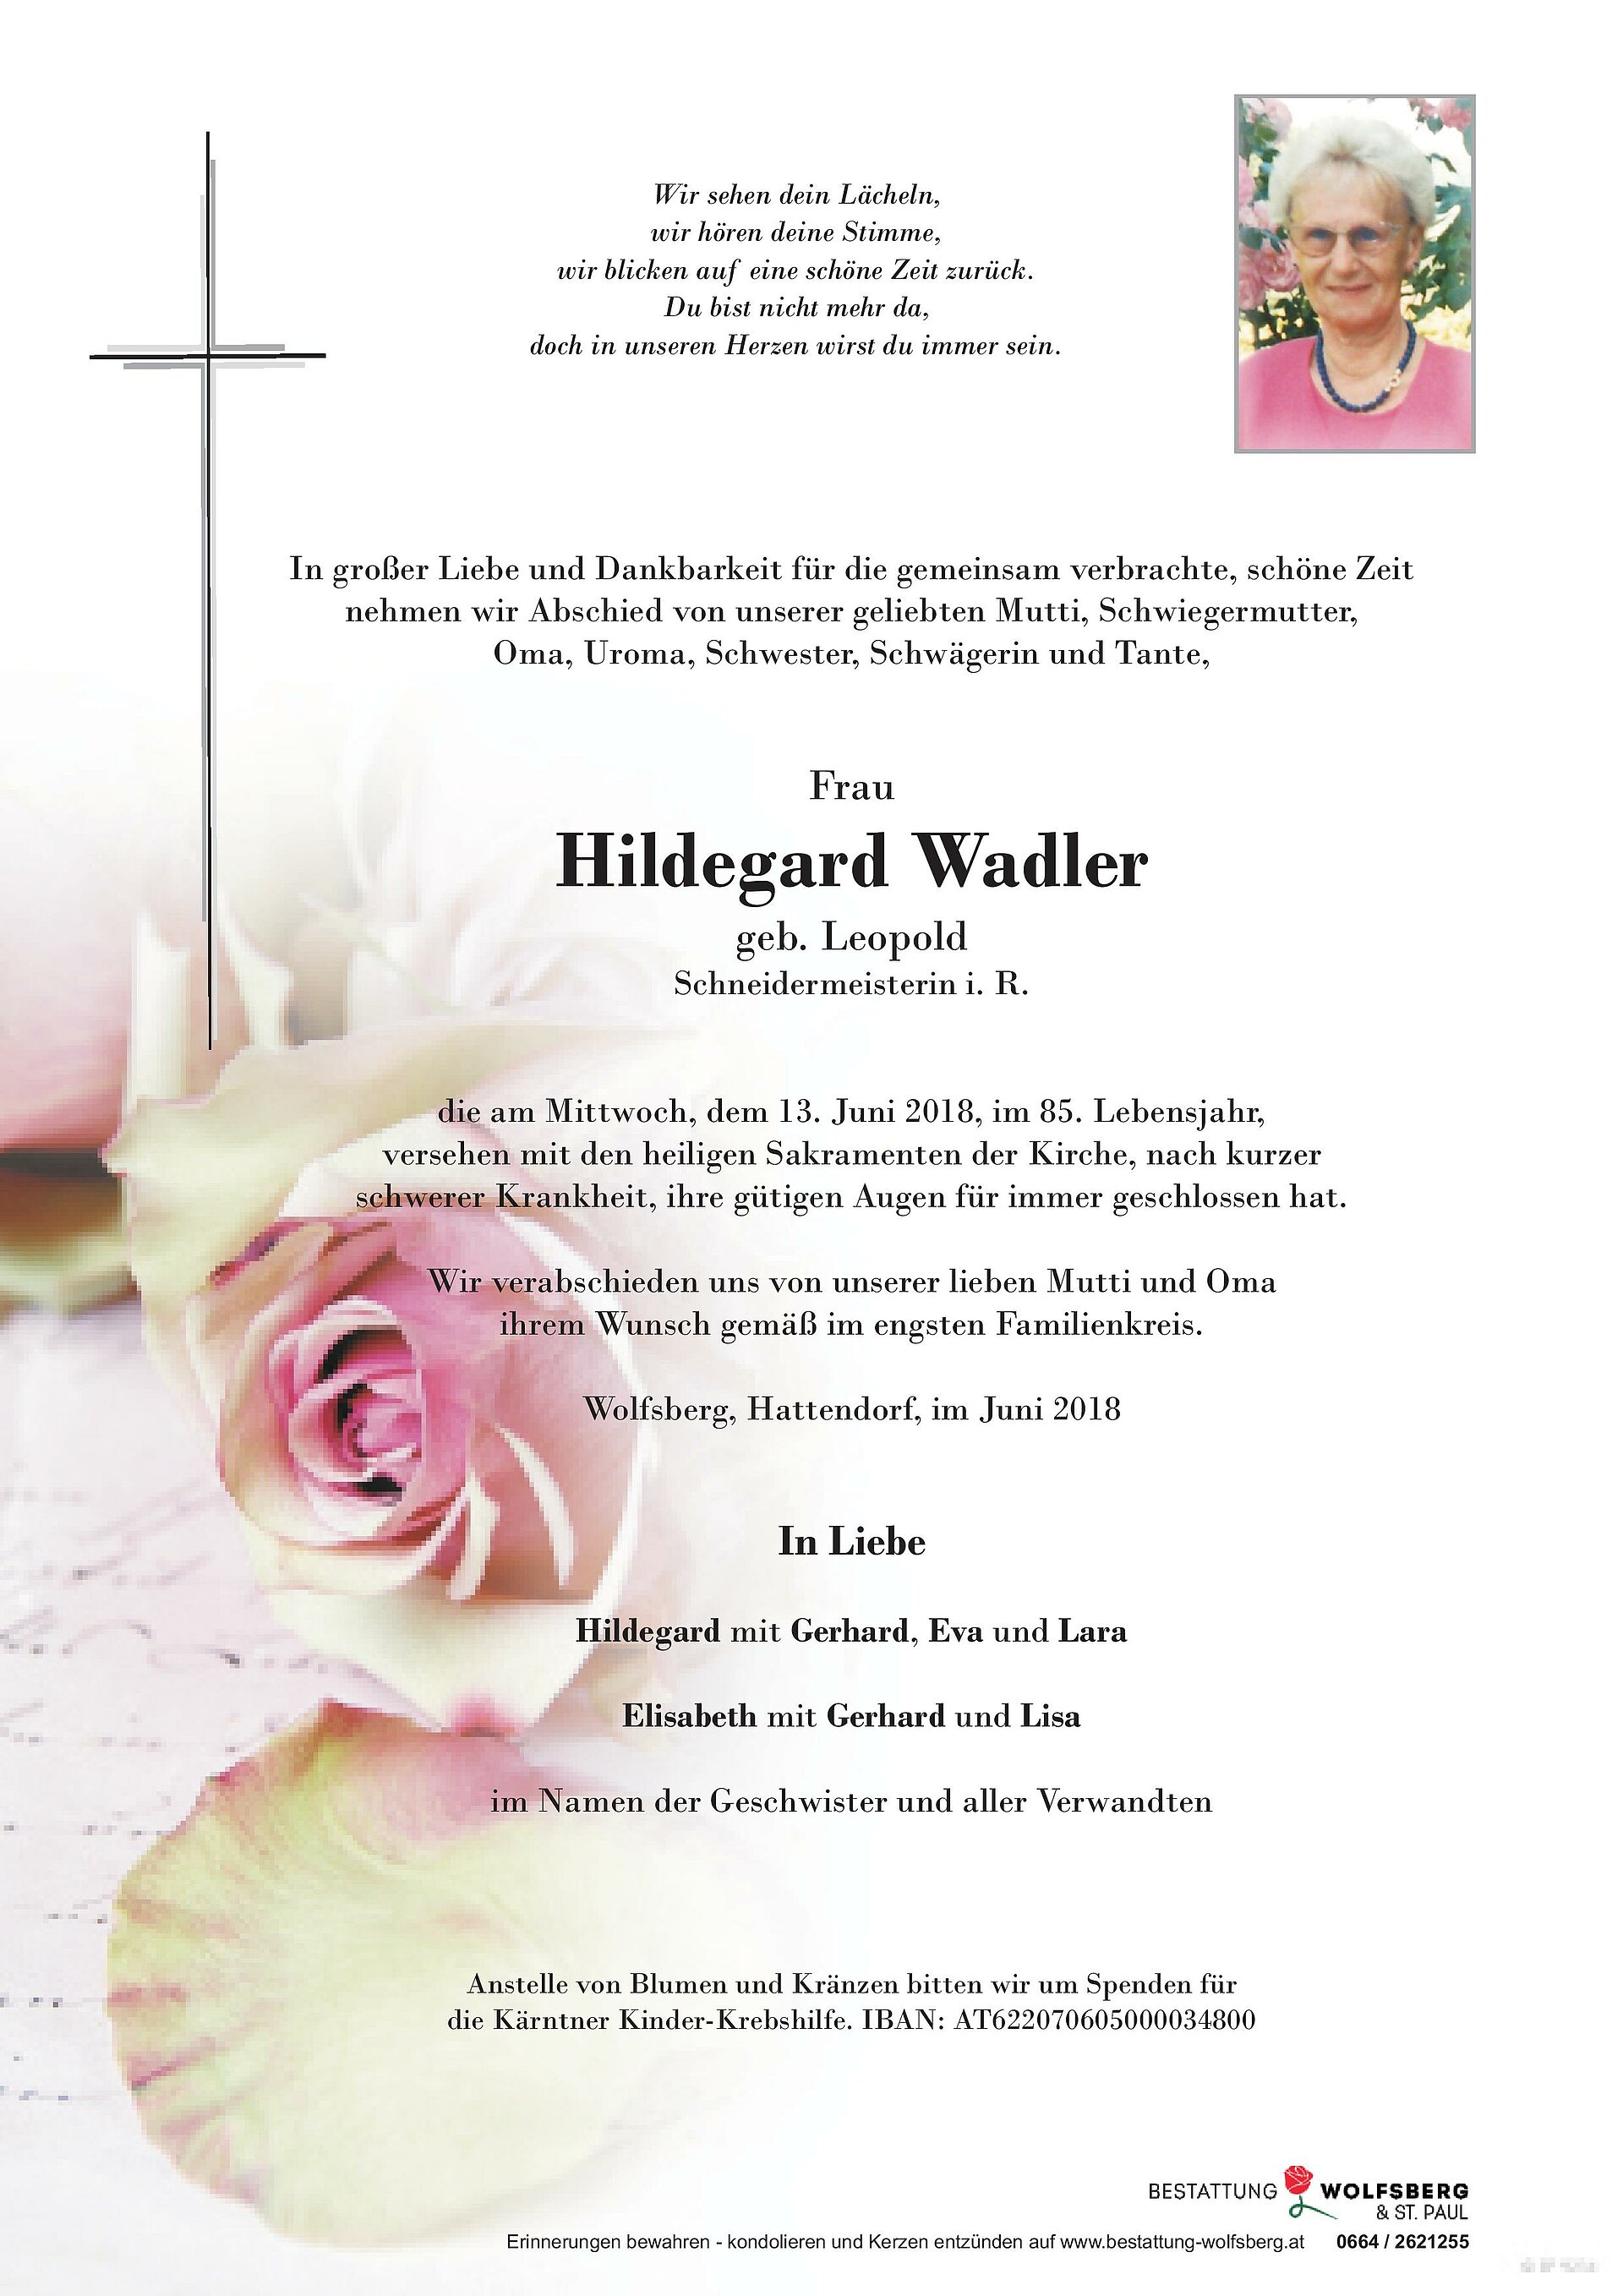 Hildegard-Wadler-EP-9234-page-001.jpg